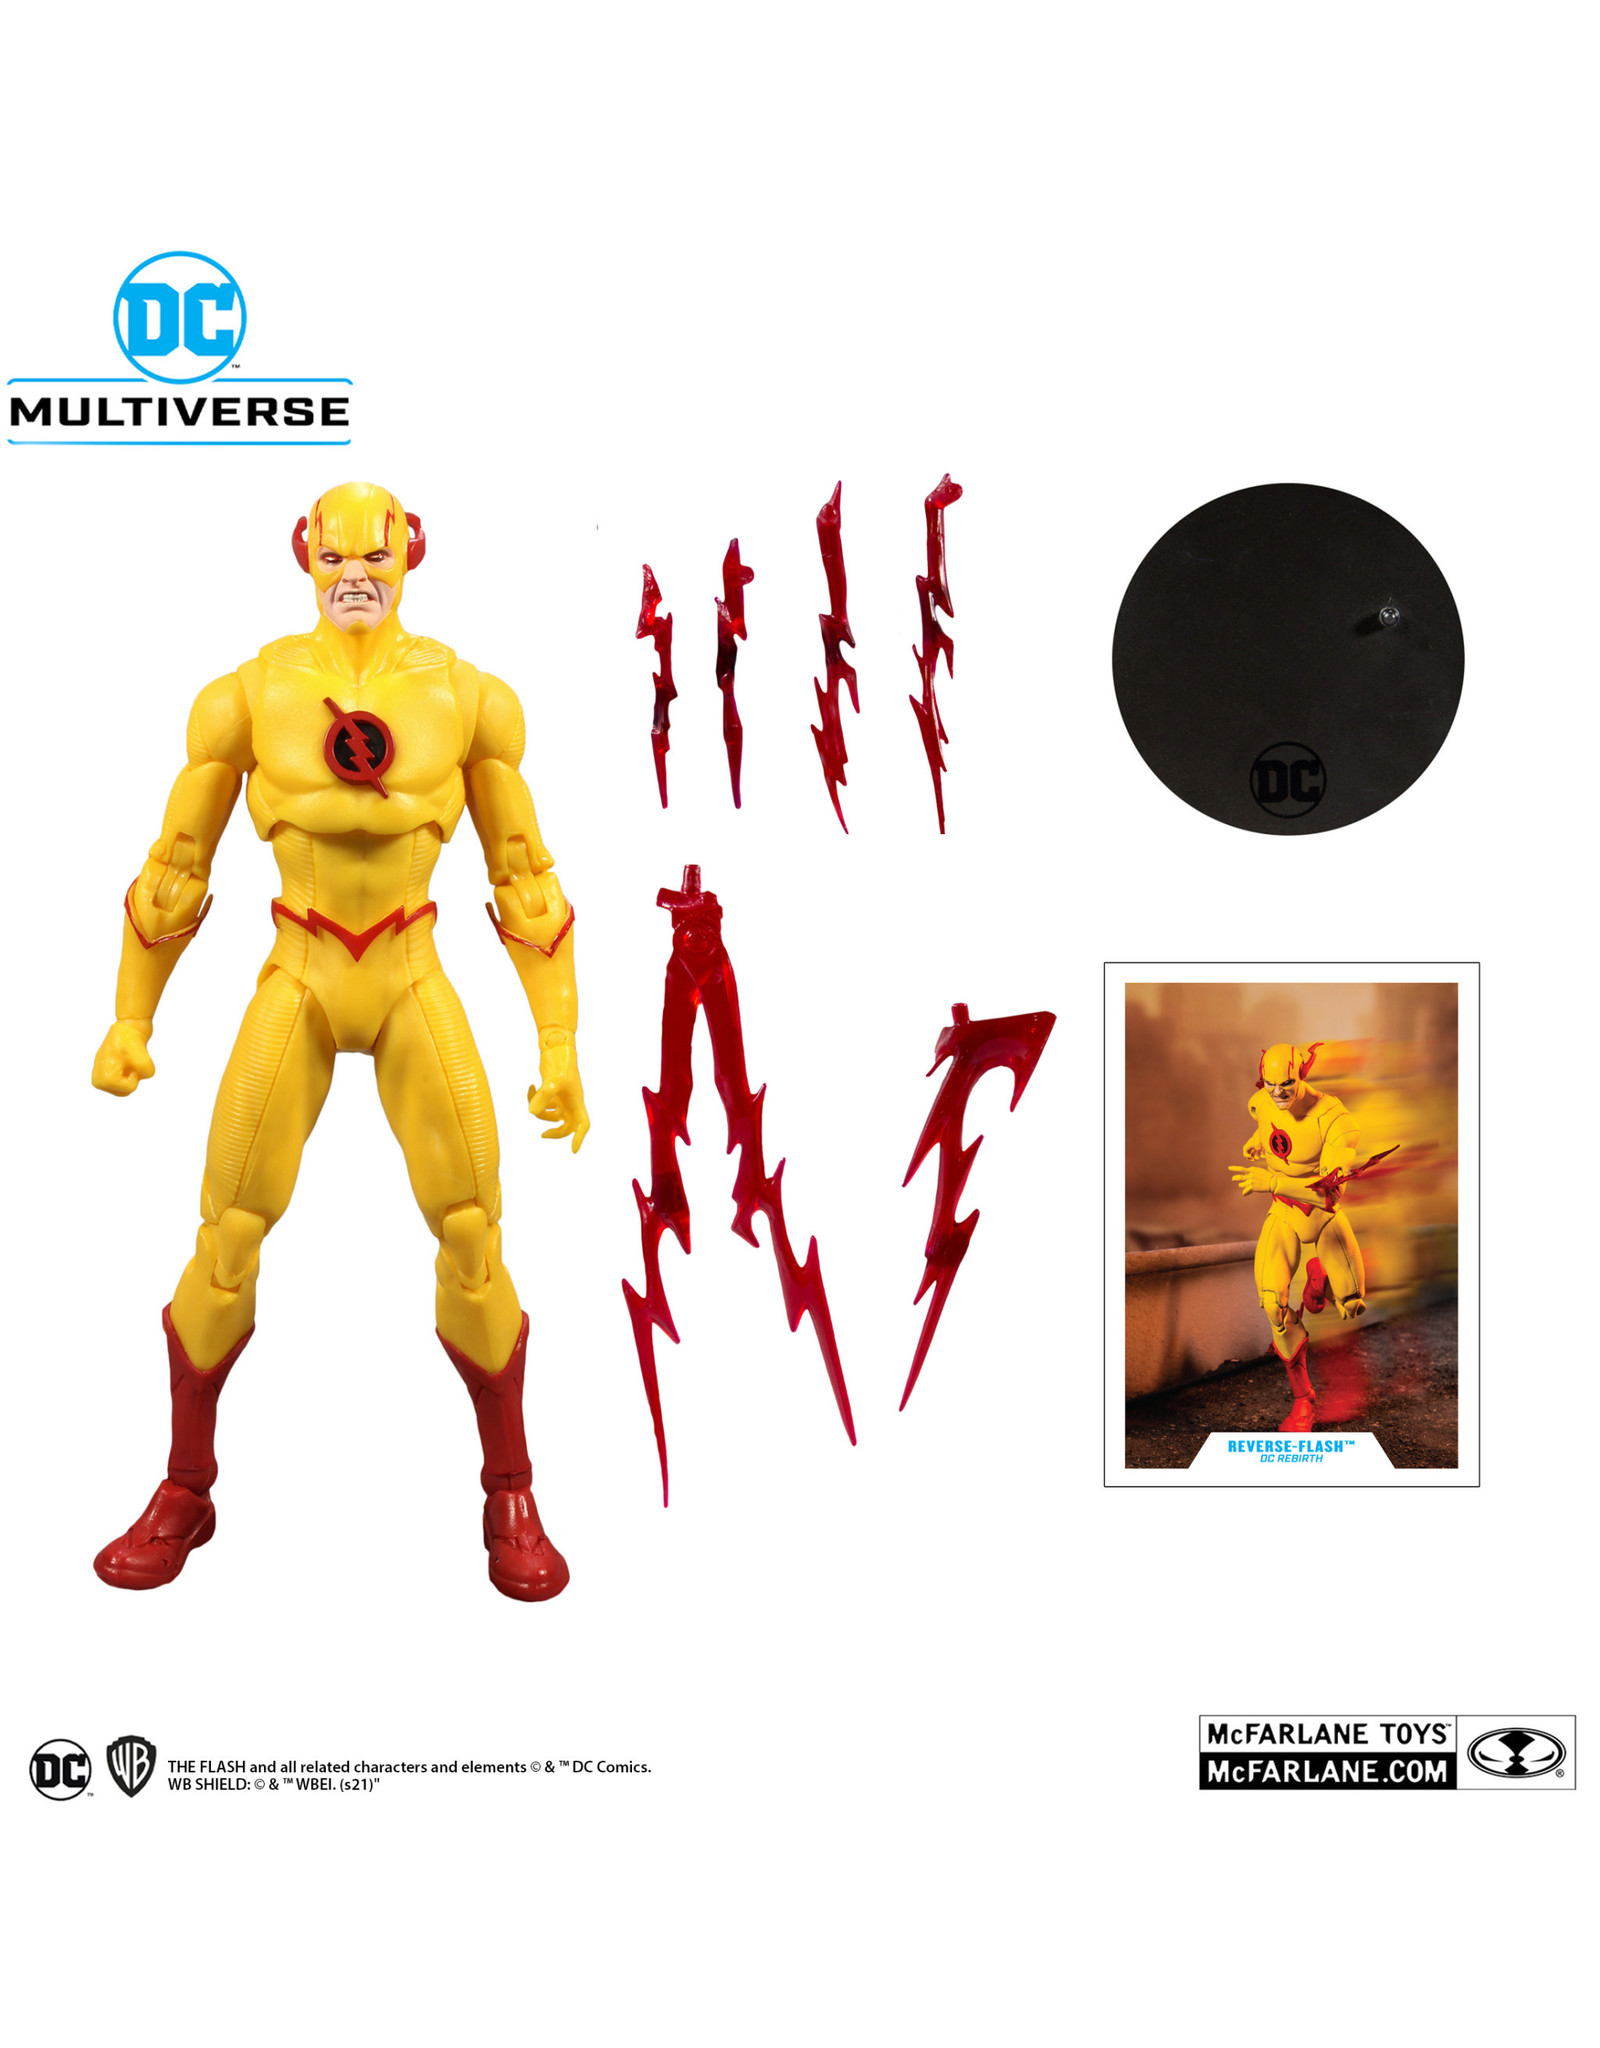 McFarlane toys DC multiverse - Reverse Flash